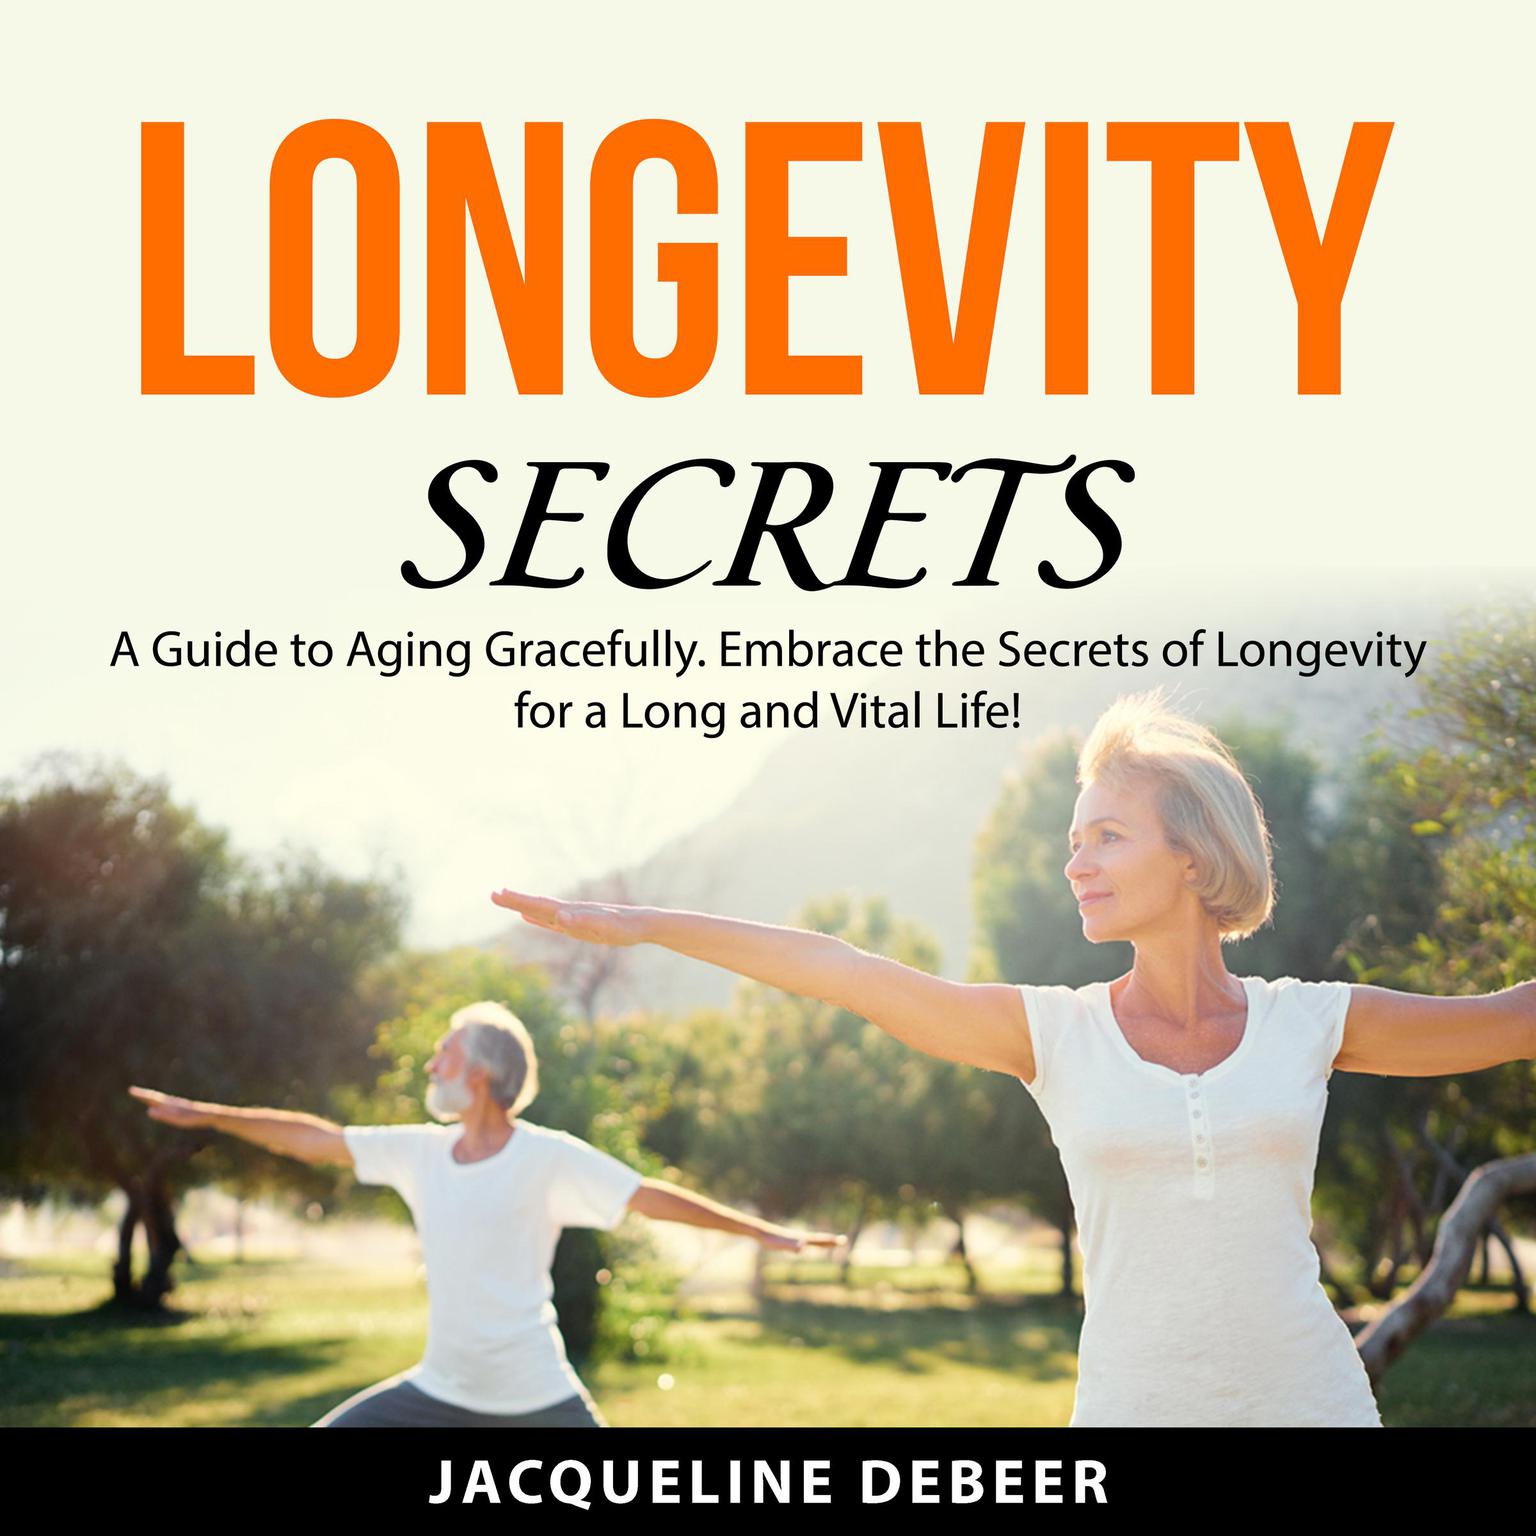 Longevity Secrets Audiobook, by Jacqueline DeBeer